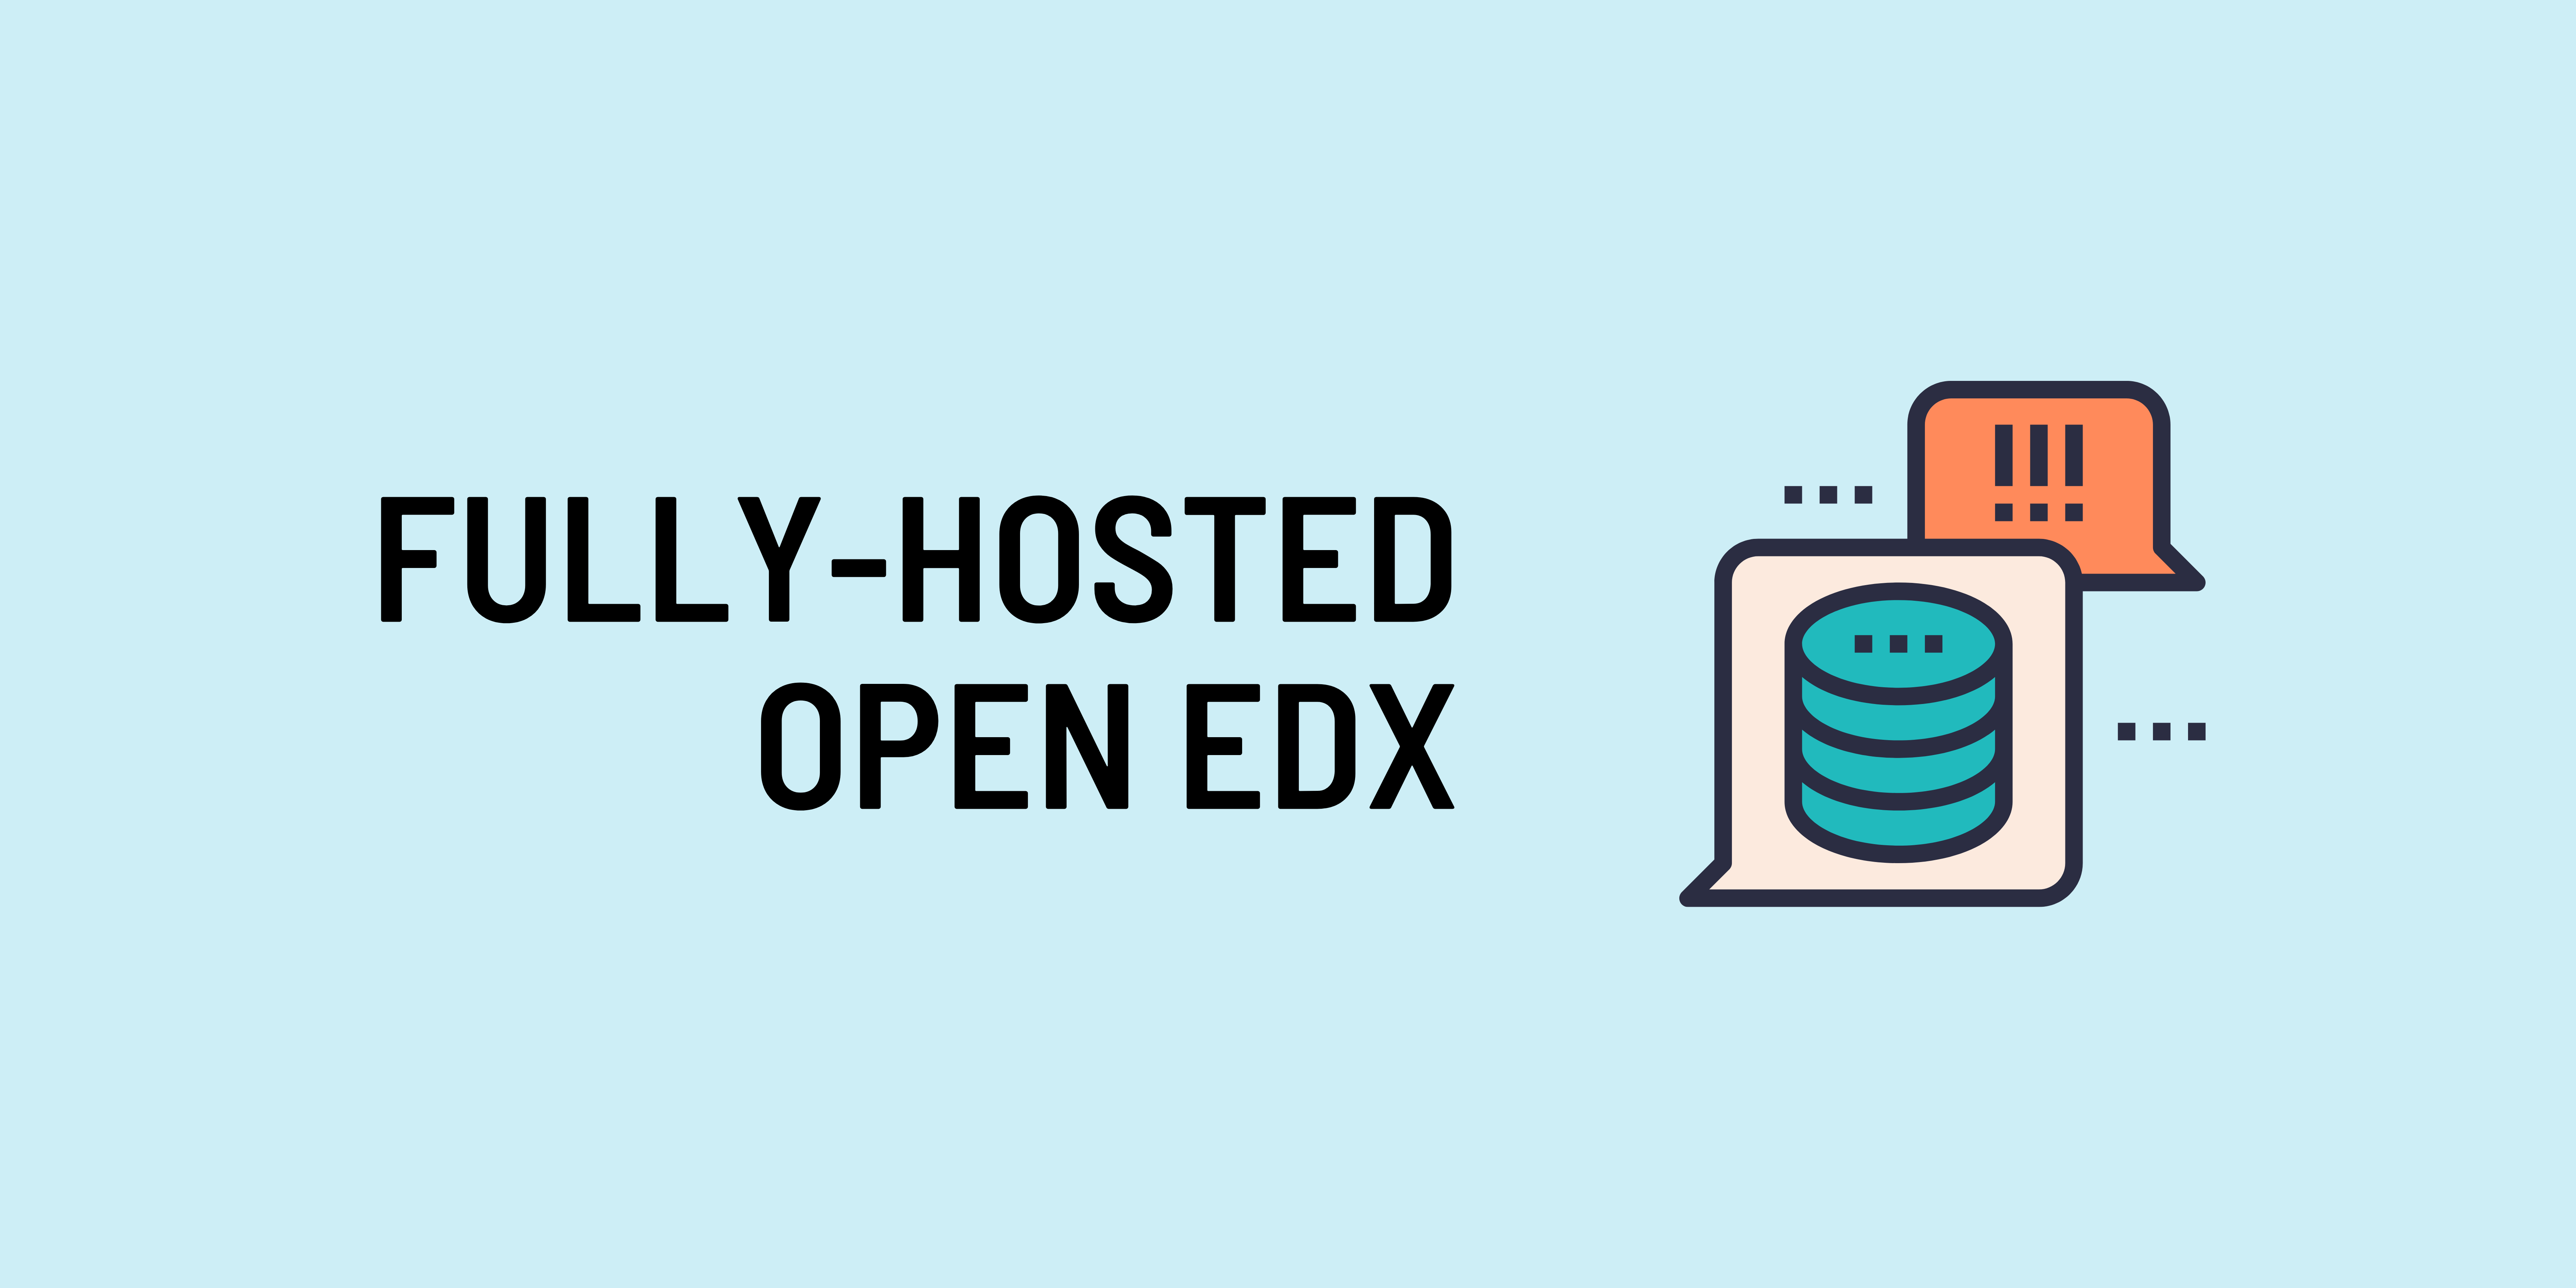 Fully-Hosted Open edX